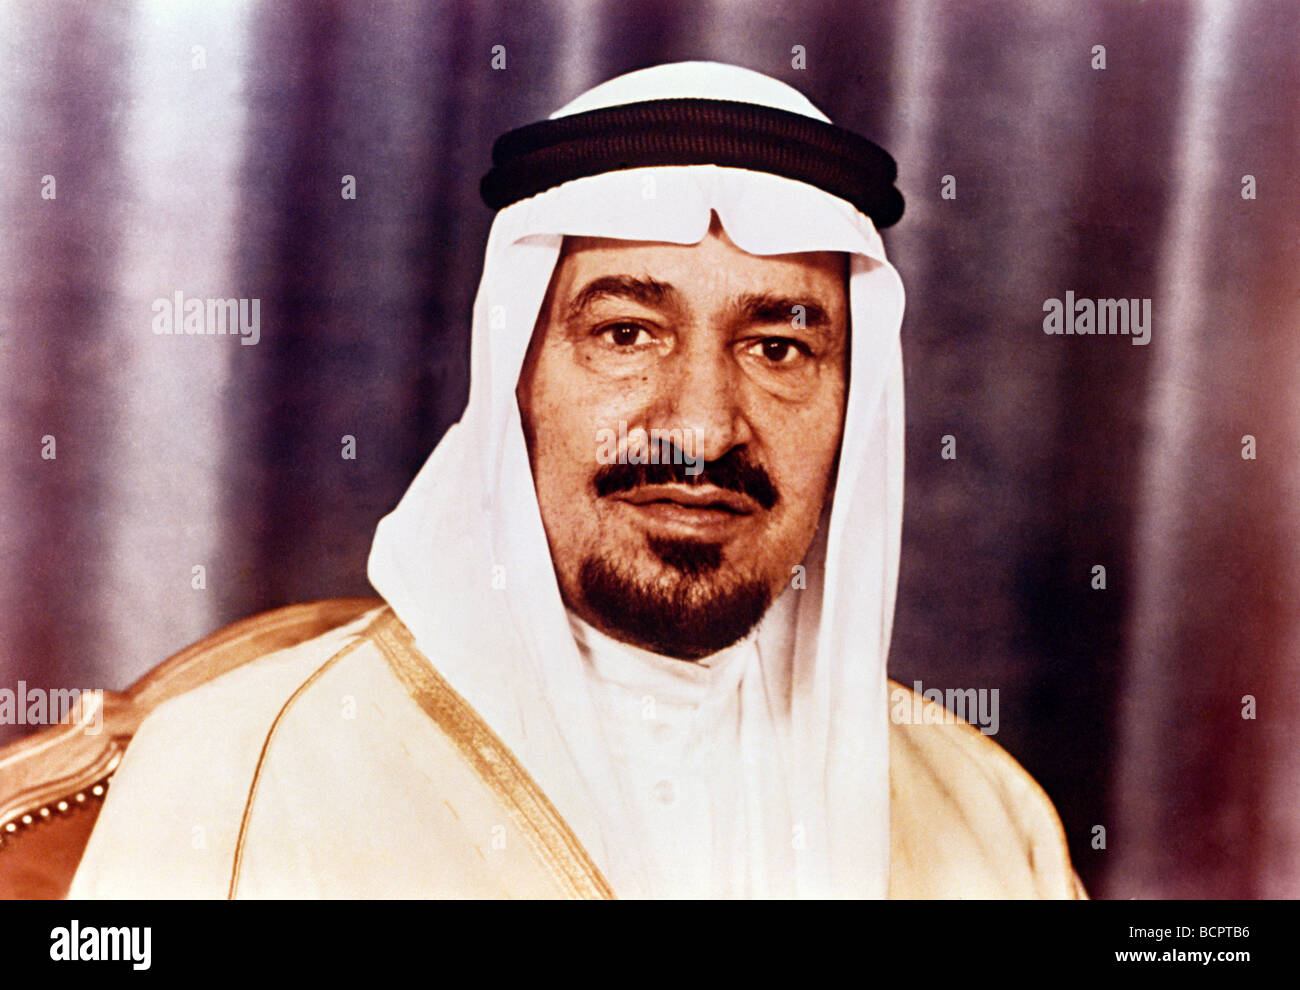 Saudi Arabia Hm King Khaled Bin <b>Abdul Aziz</b> - saudi-arabia-hm-king-khaled-bin-abdul-aziz-BCPTB6